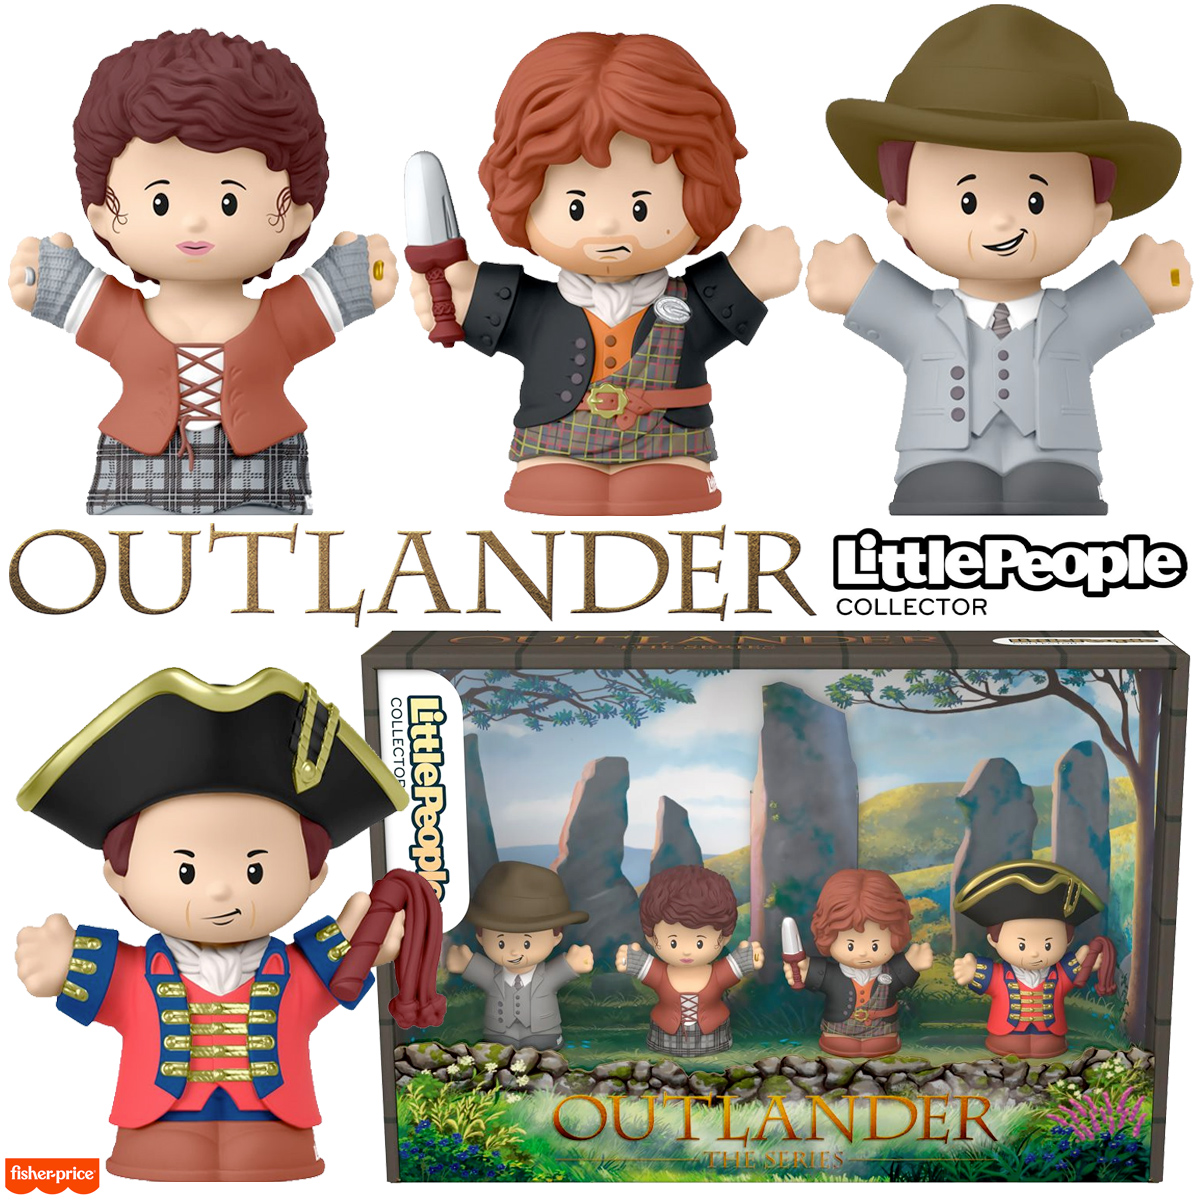 Bonequinhos Little People Collector da Série Outlander (Fisher-Price)